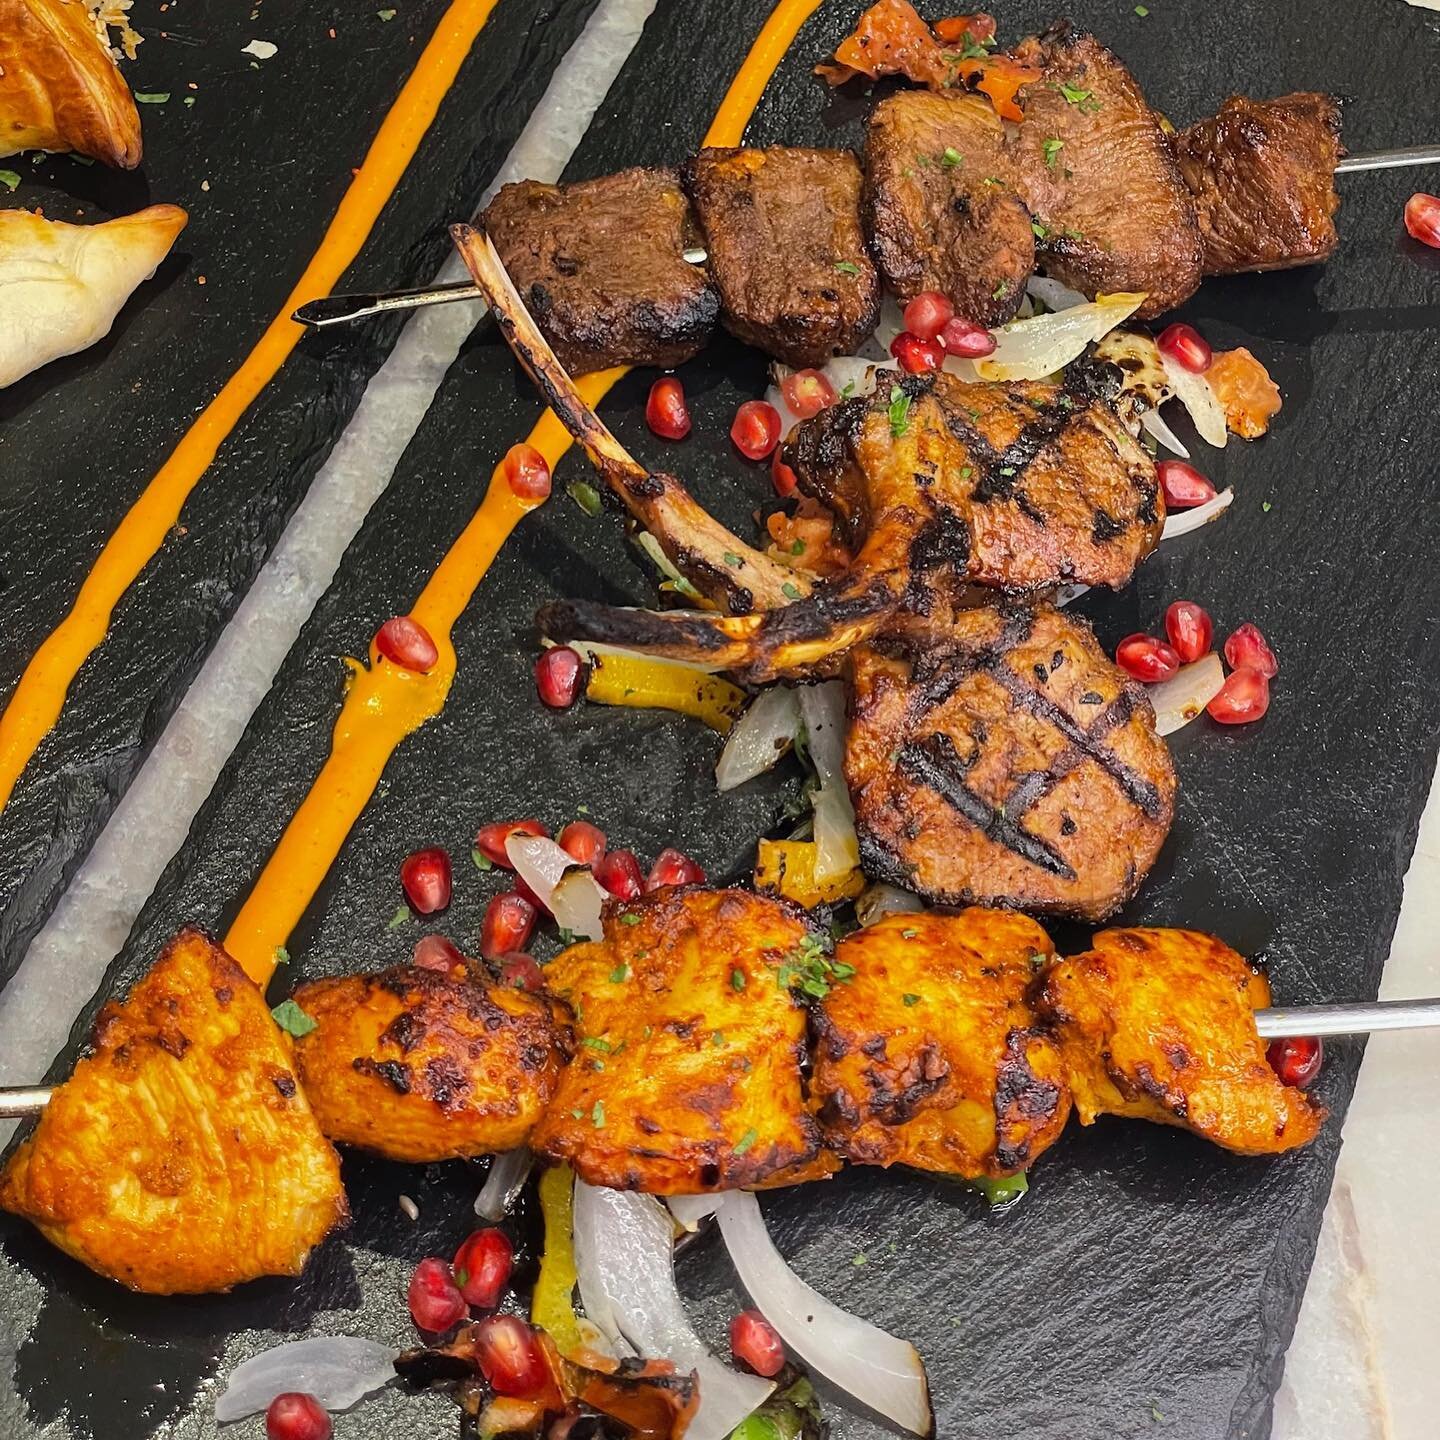 Have you tried our delicious kebabs and lamb chops?! 😍🤩 #10e #10erestaurant #dtla #dtlarestaurant #dtlafoodie #armenianfood #lebanesefood #mediterraneanfood